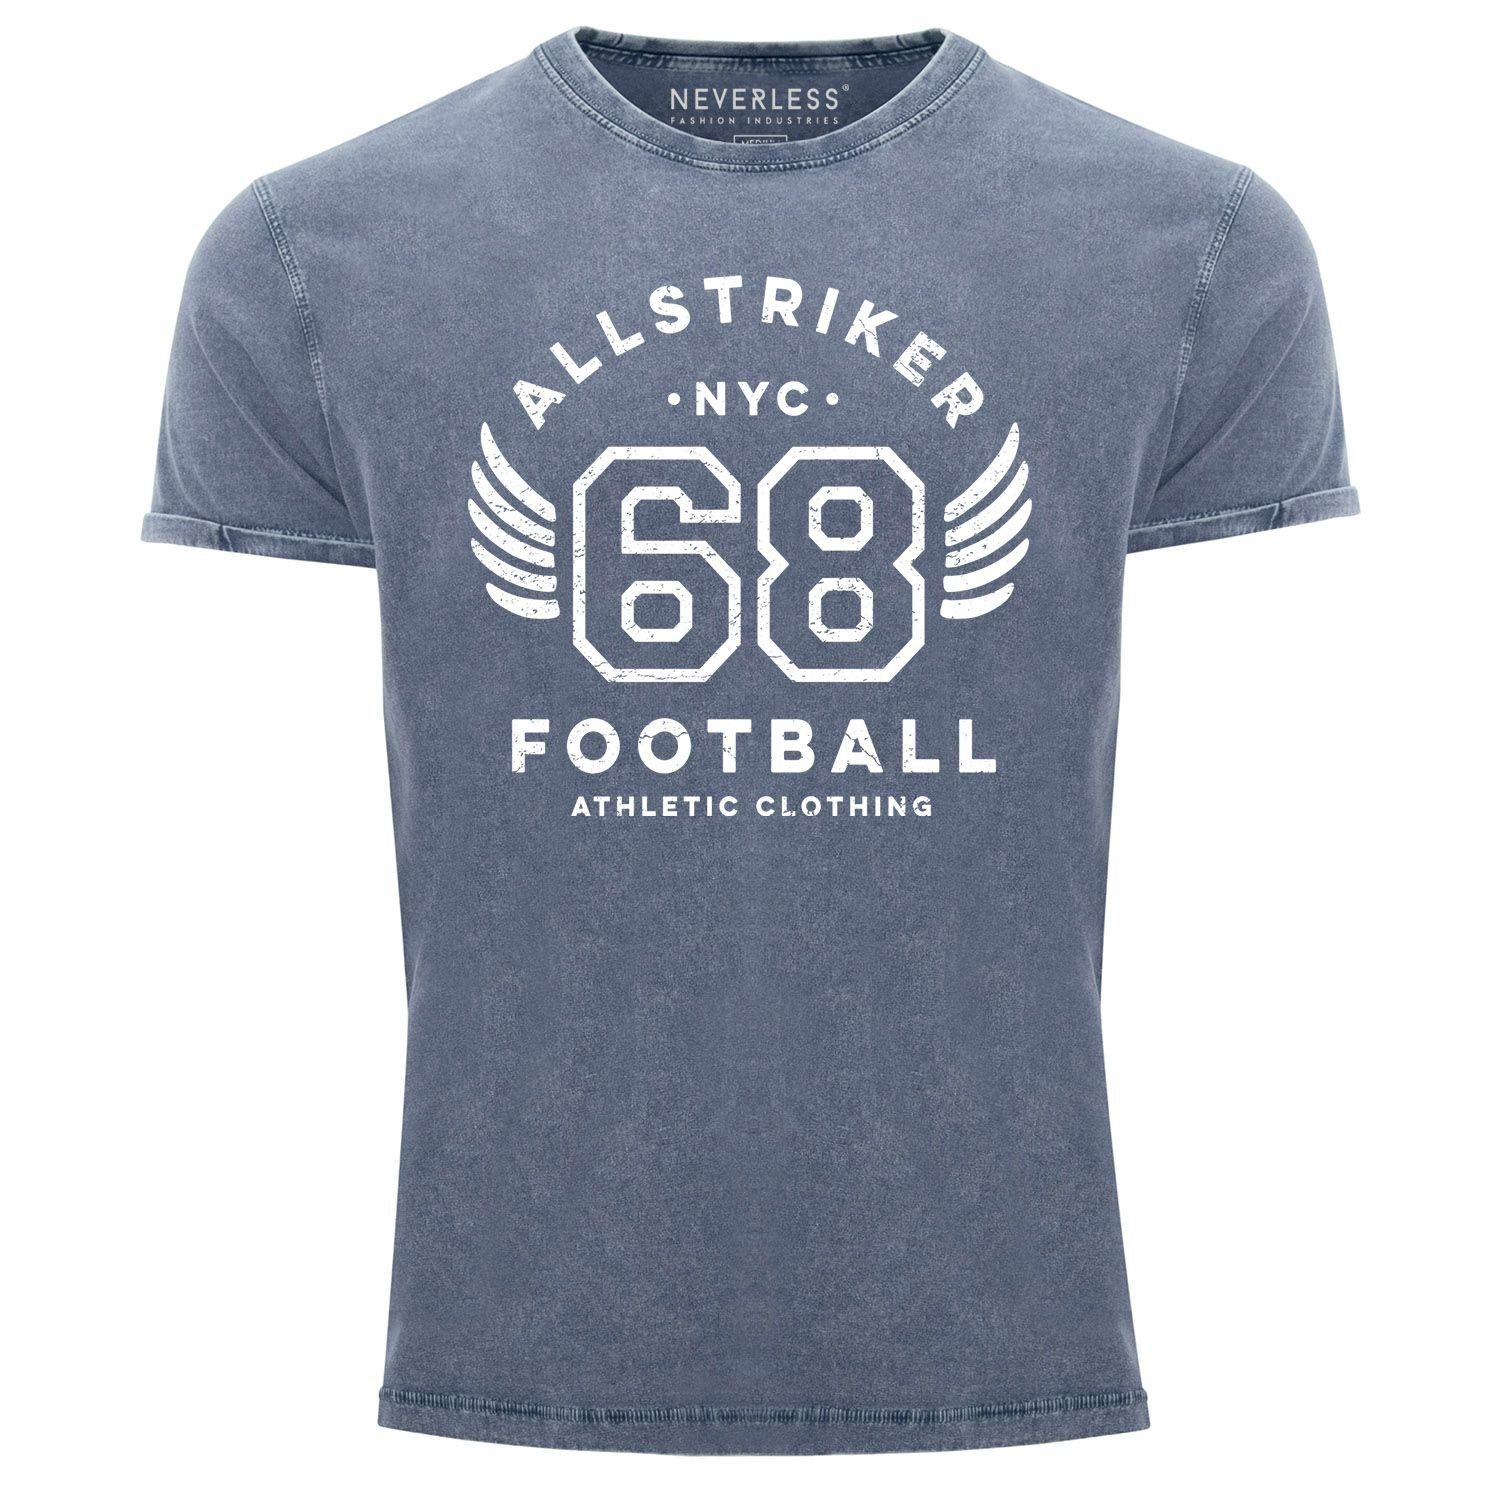 Neverless Print-Shirt Herren Vintage Shirt College NYC 68 Football Athletic Clothing Vintage Printshirt T-Shirt Used Look Slim Fit Neverless® mit Print blau